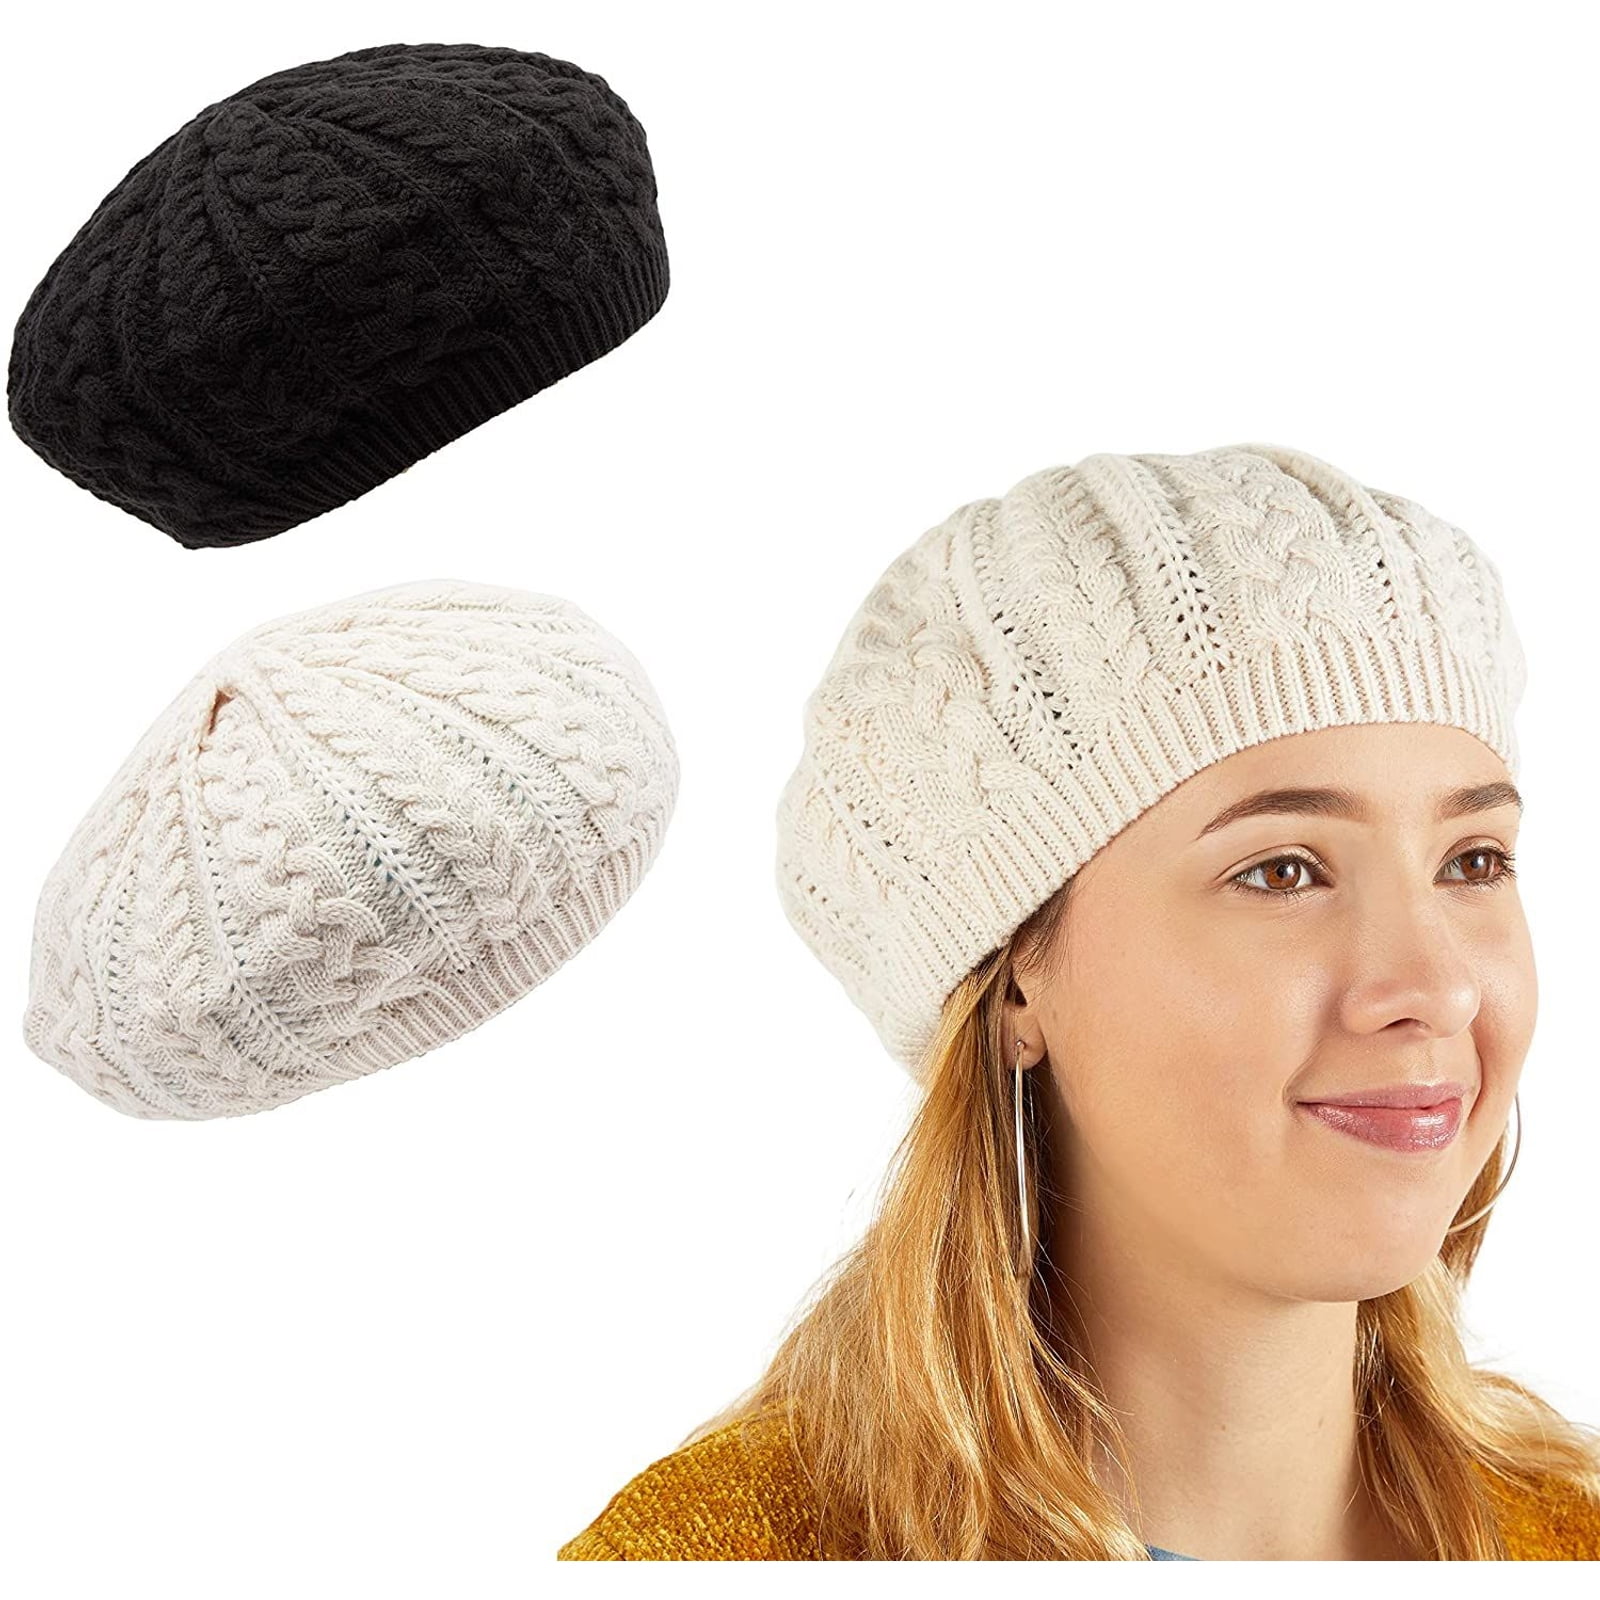 Knitted Women's Hats Slouchy beanie women,wool hat round scarf knit hat